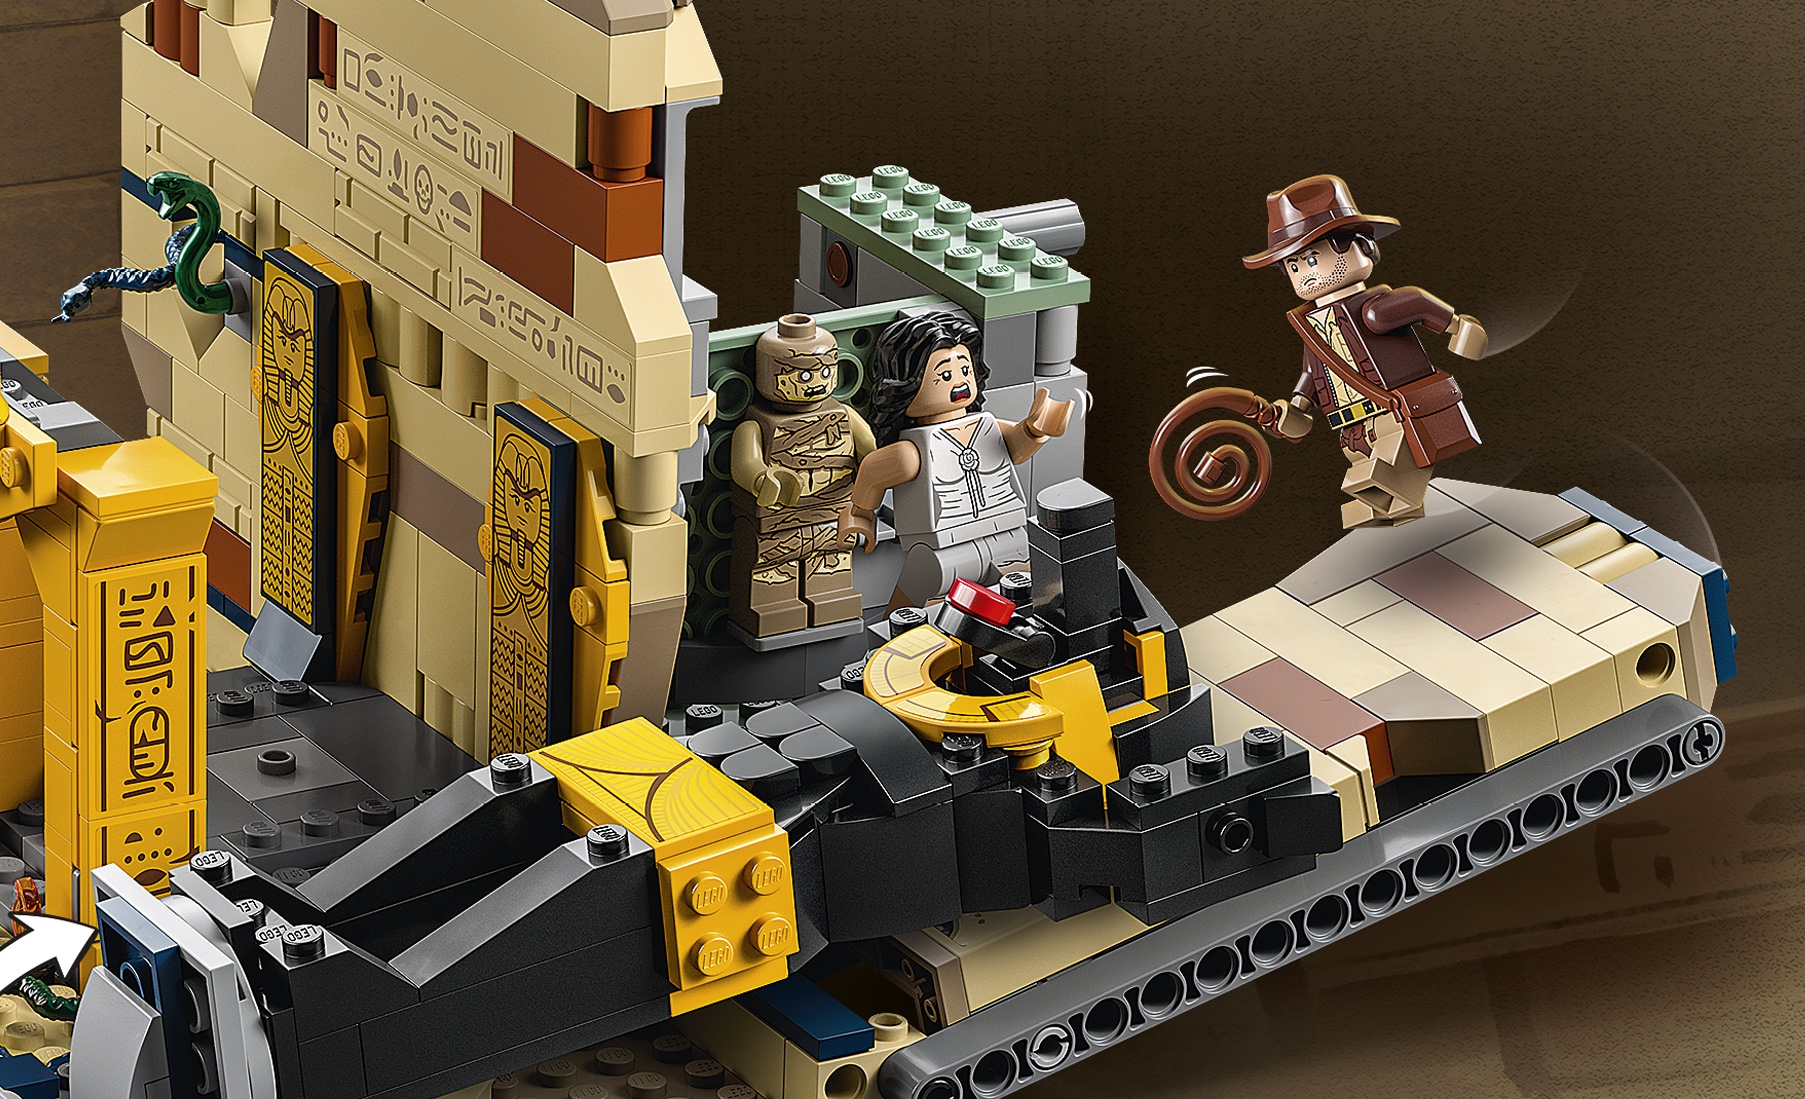 Indiana Jones Lego set close-up on box of Lego Indy jumping to save Lego Marion